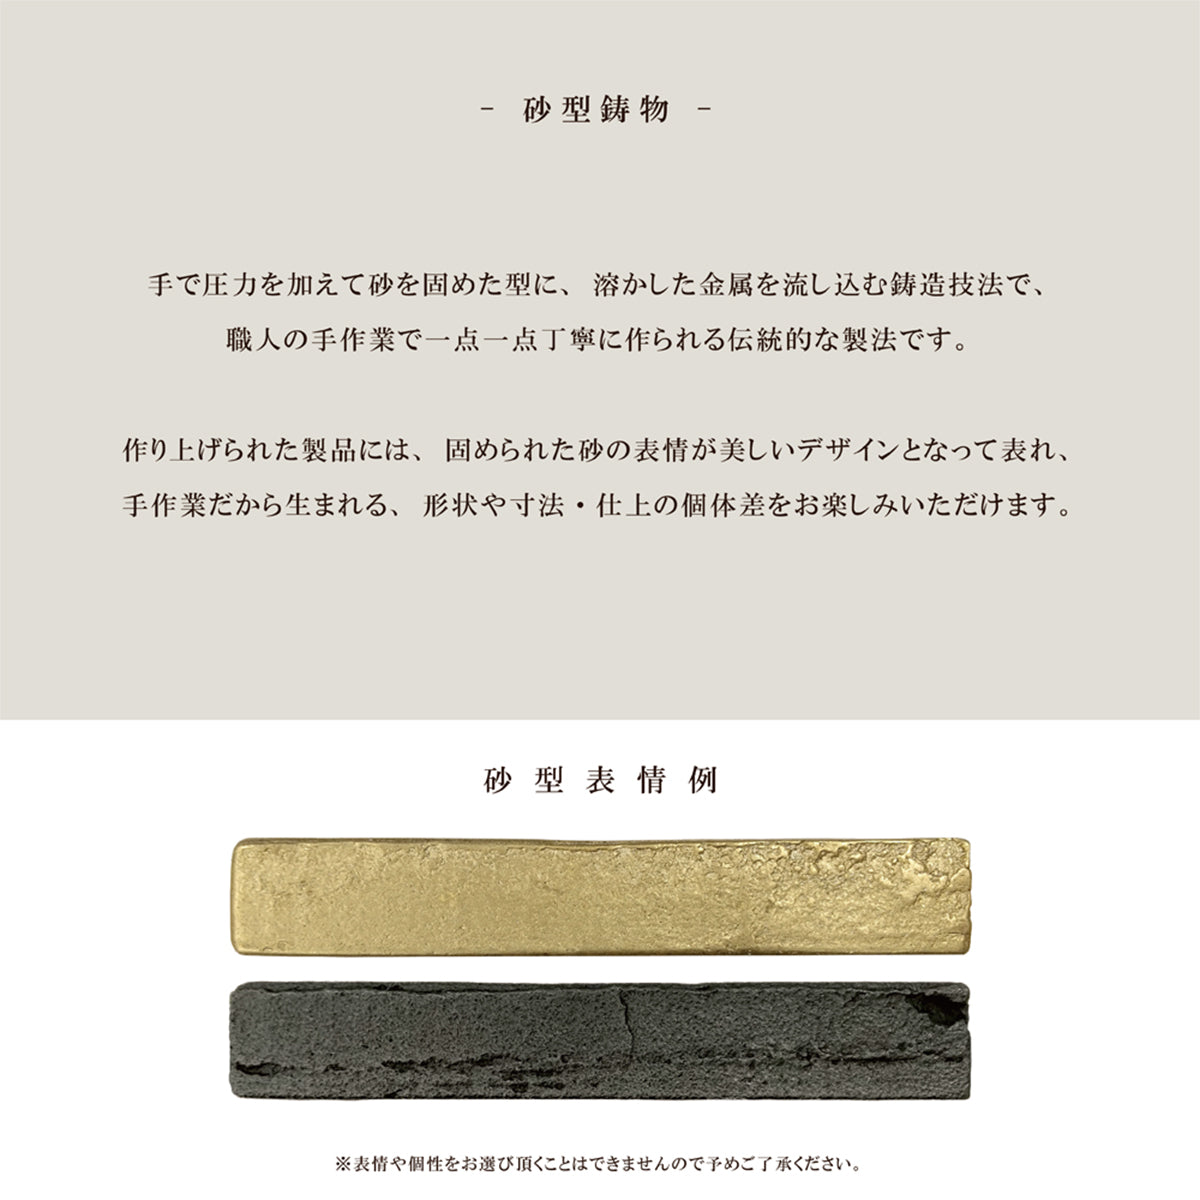 Brass Casting 真鍮鋳物 アンティーク 棚受け (C型 真鍮色 2個セット TB-201) 8cm×7cm